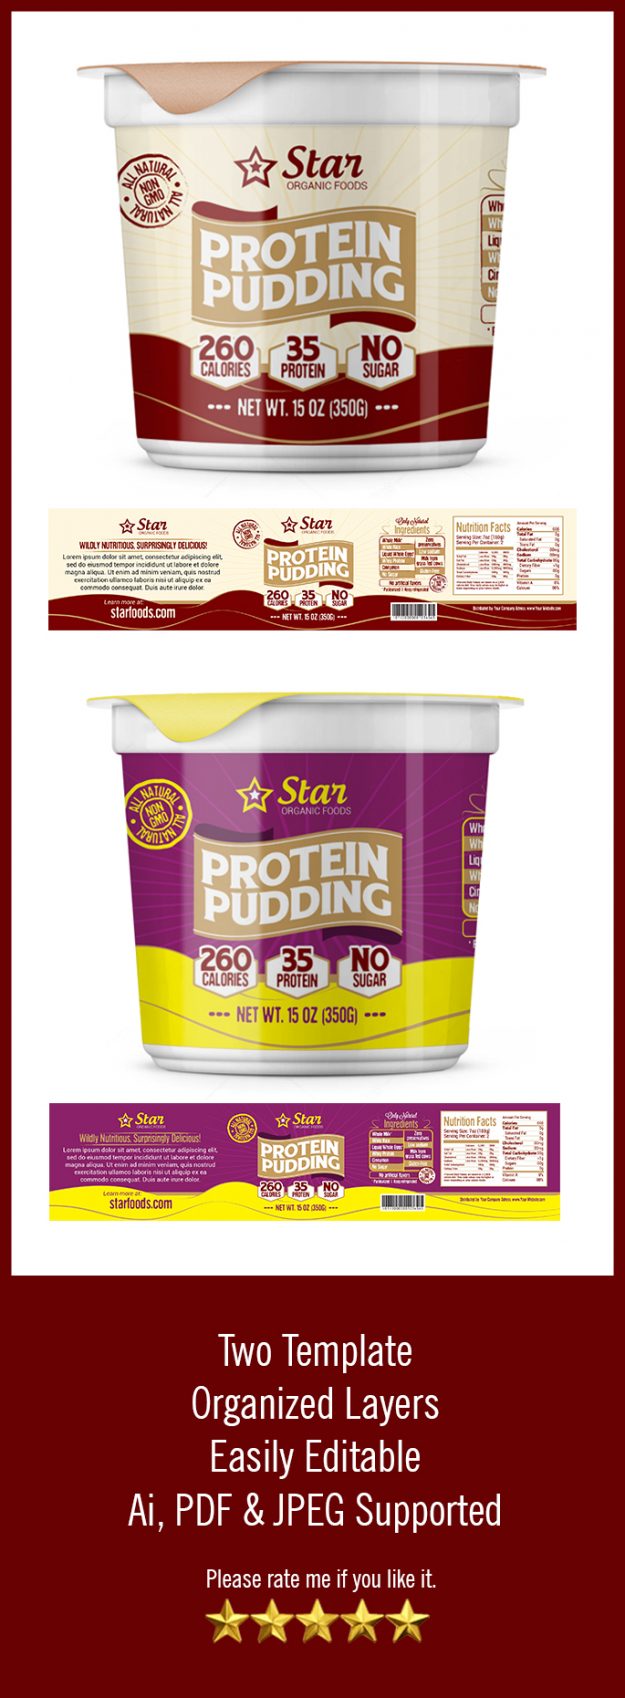 Protein Pudding Label Design